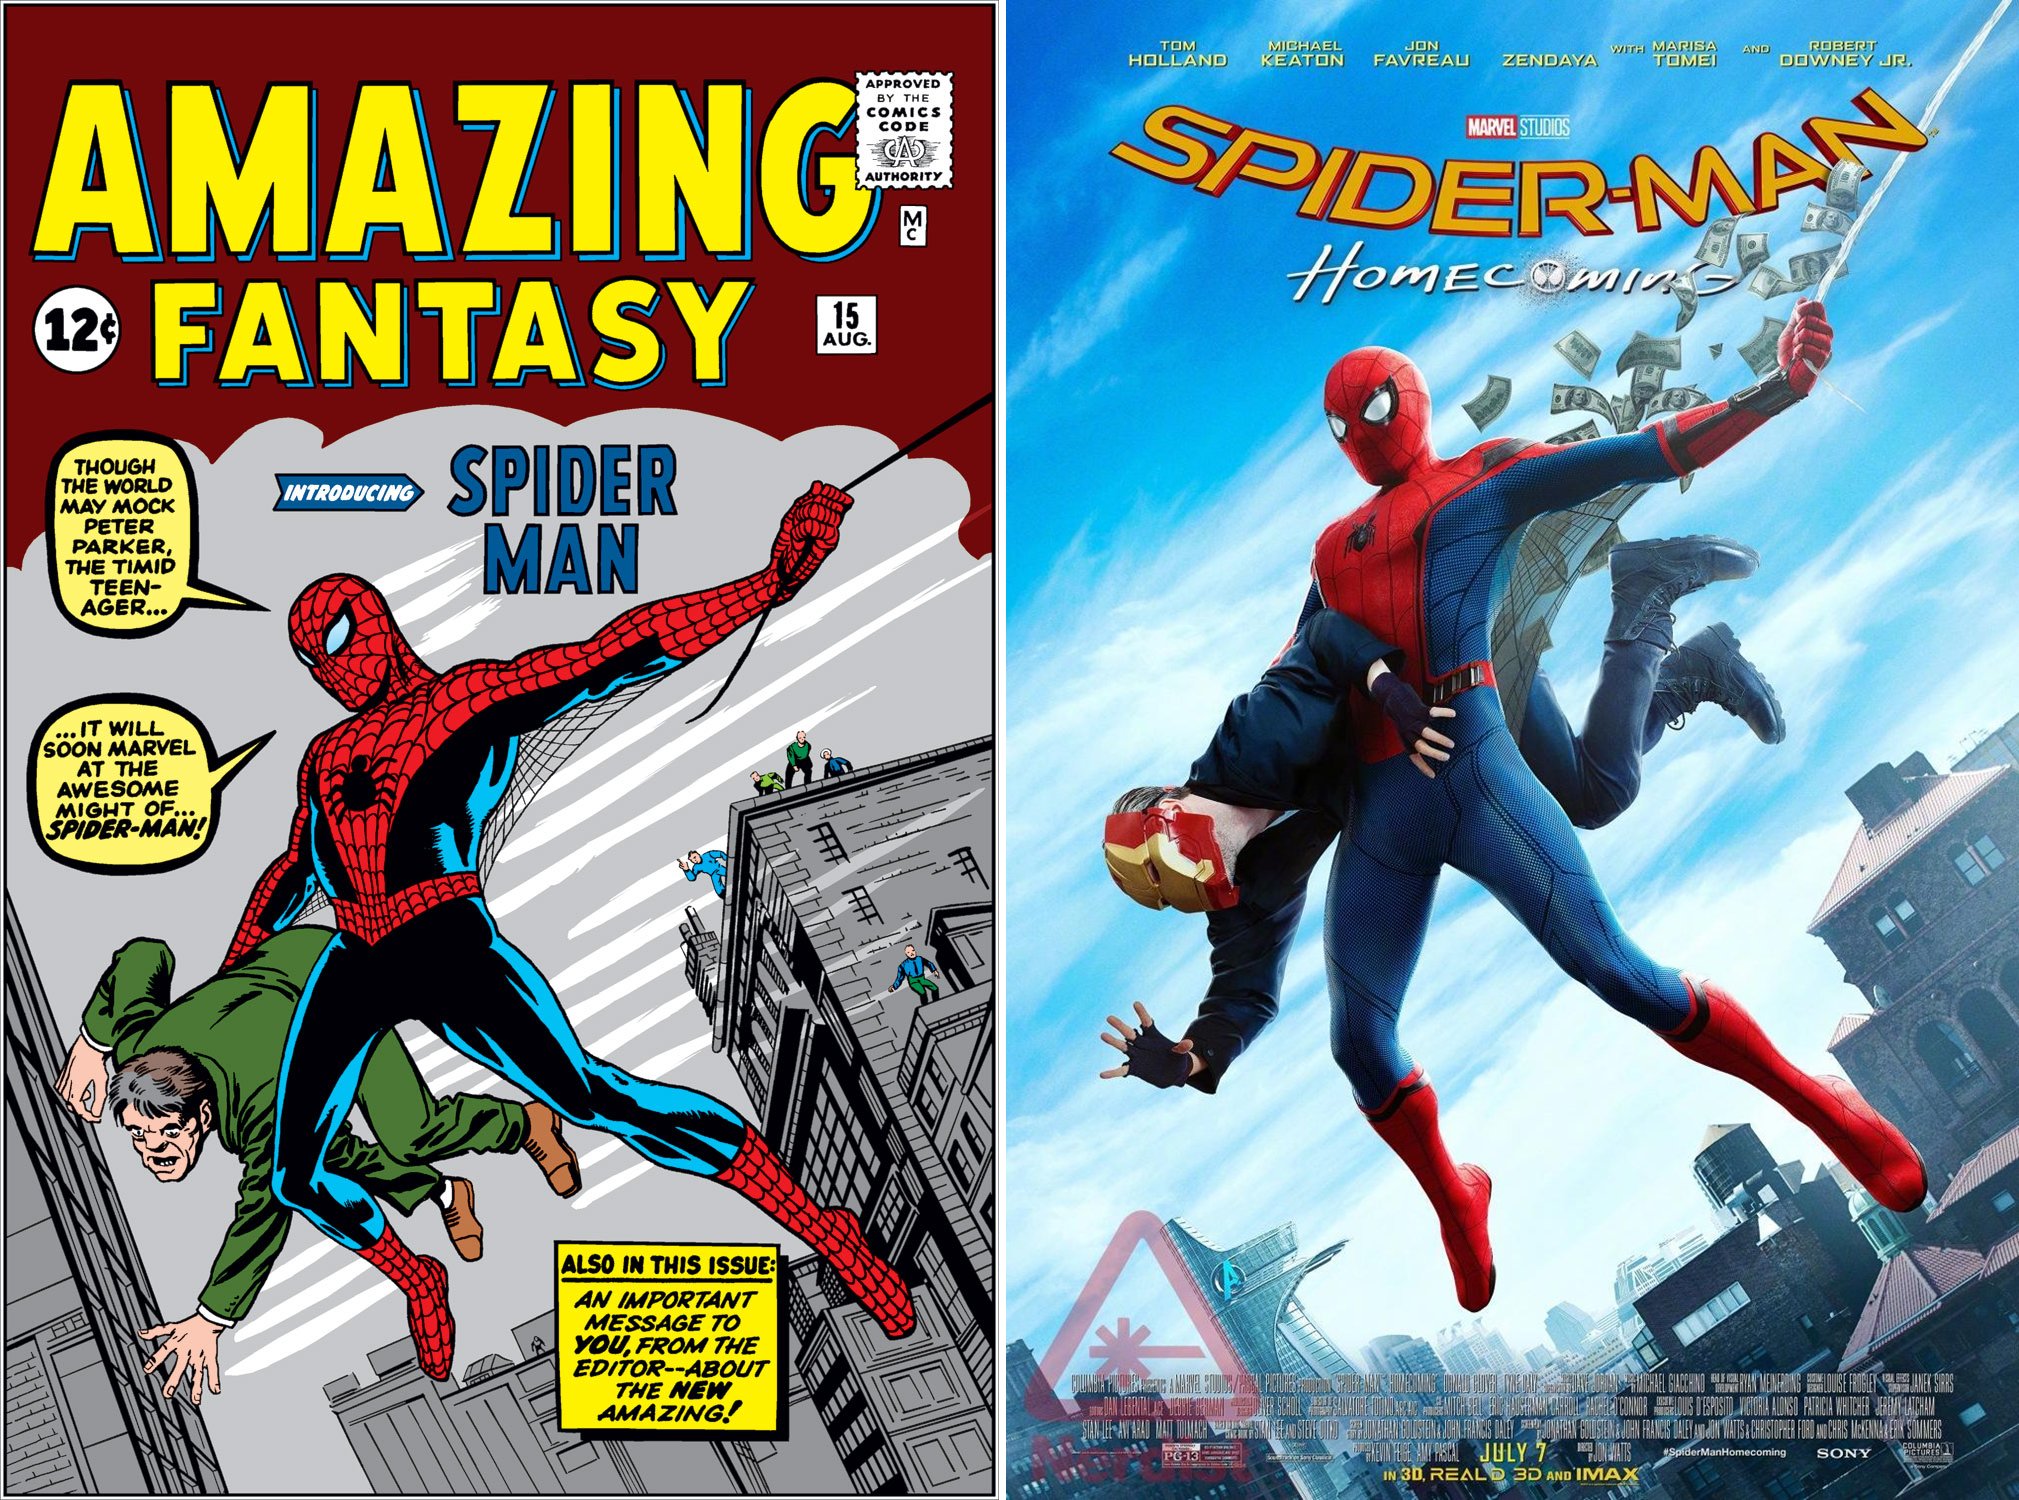 11x17 Amazing Fantasy 15 Starring Spider-man Poster Print 